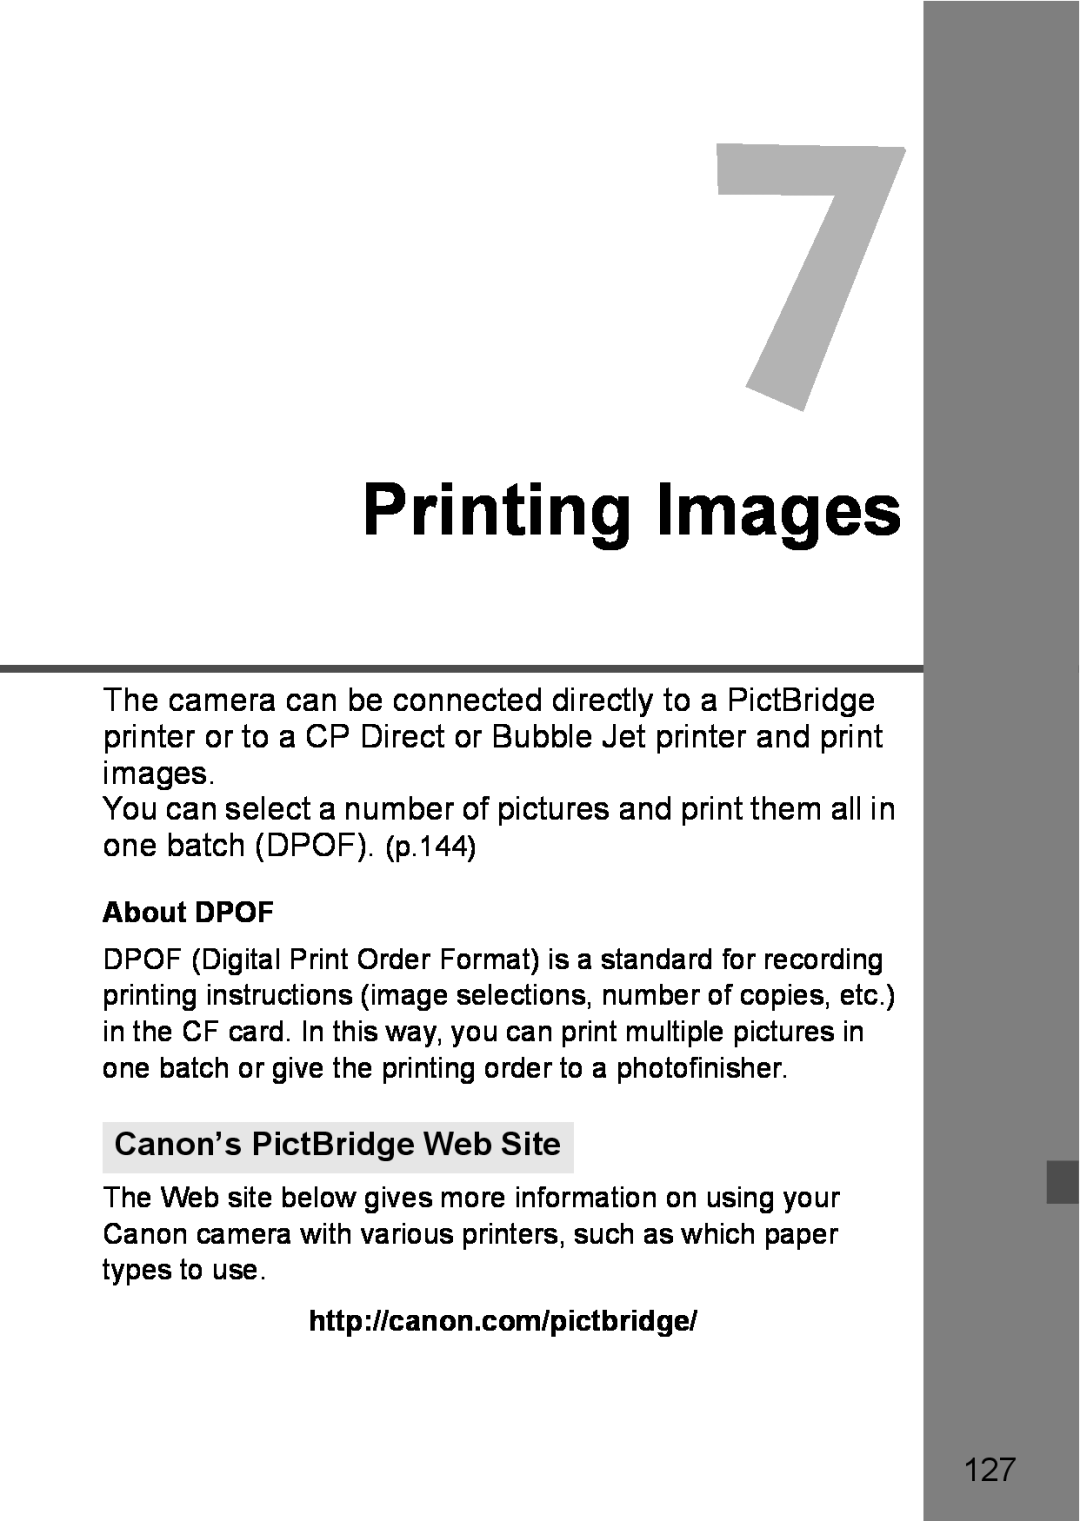 Canon EOS DIGITAL REBEL XTI instruction manual Printing Images, Canon’s PictBridge Web Site 